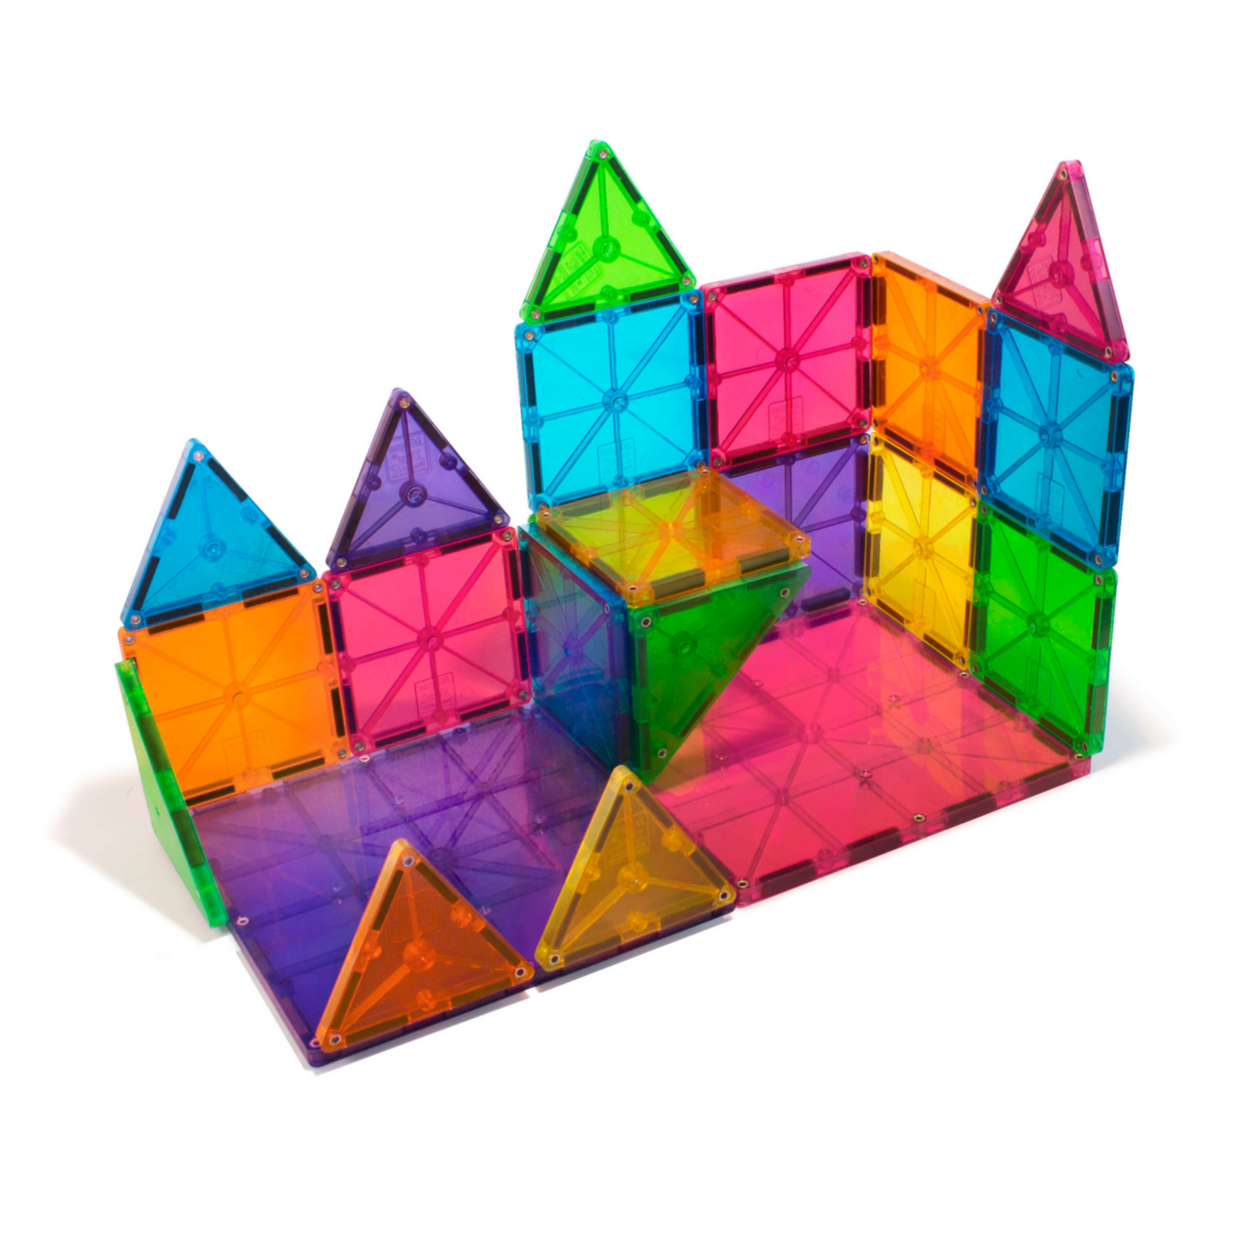 Magna-Tiles Clear Colors 32-Piece Set -3yrs+